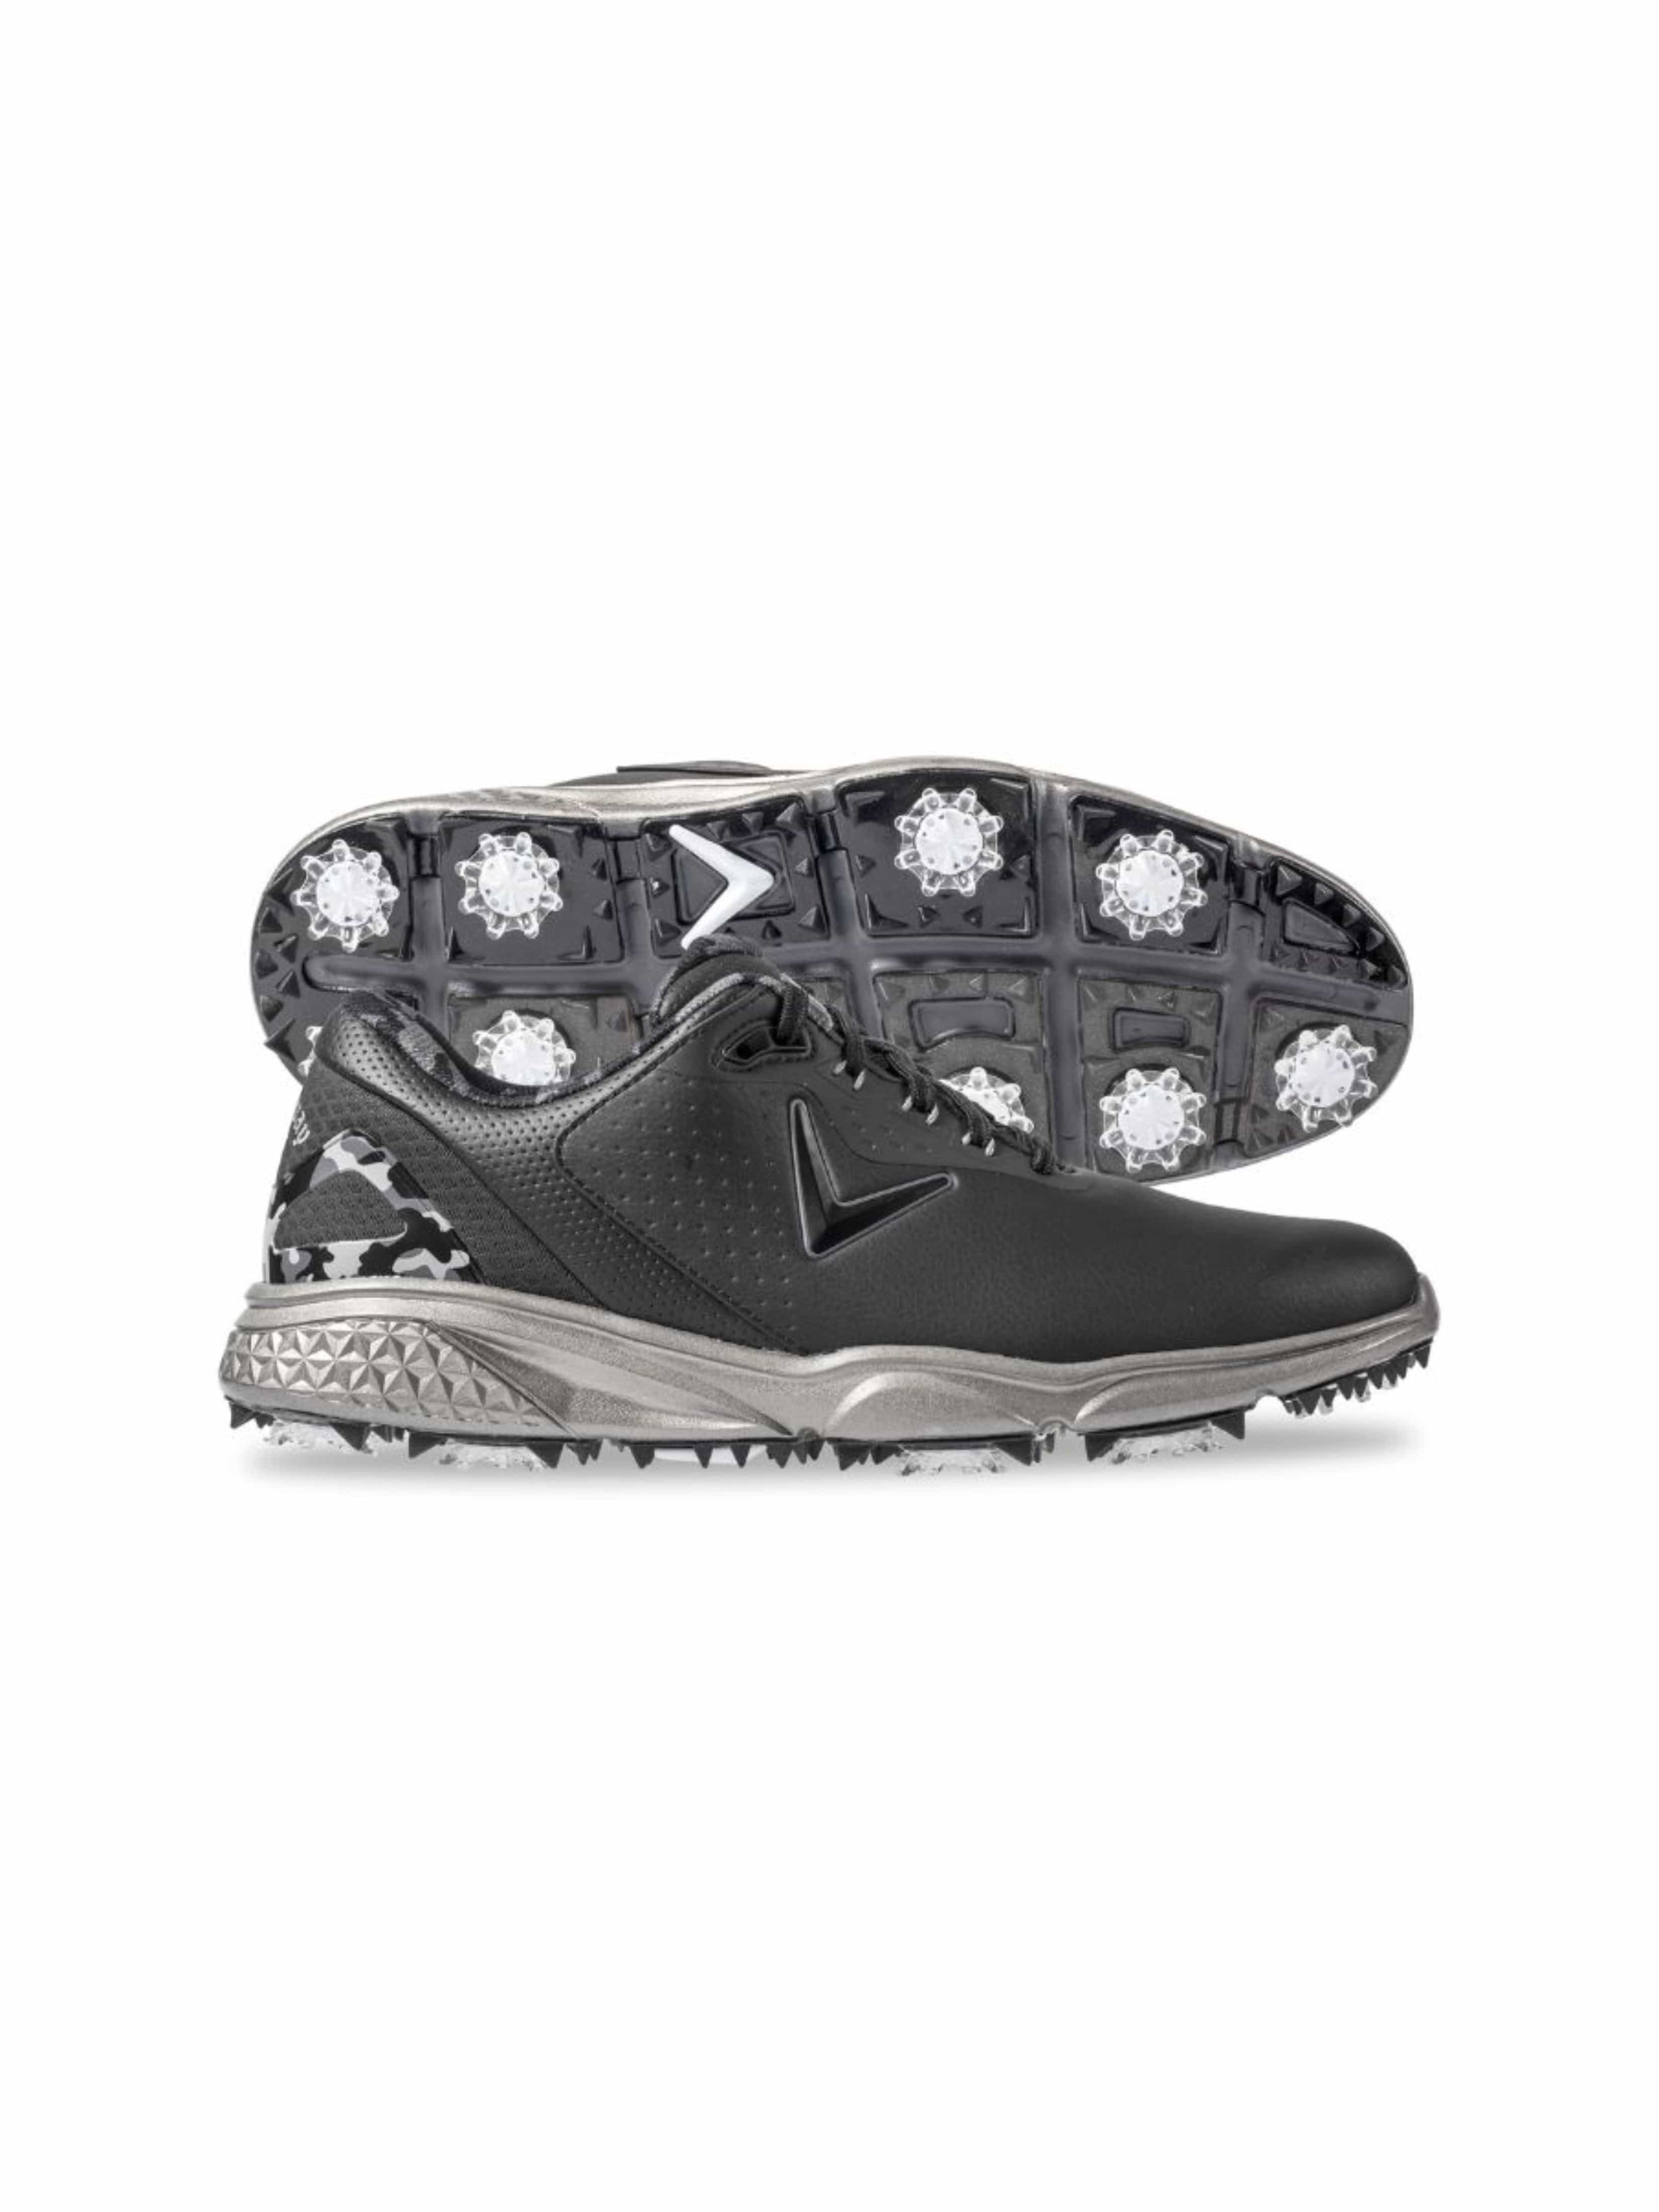 Callaway Apparel Mens Coronado V2 Golf Shoes, Size 12, Black, Polyurethane/Nylon | Golf Apparel Shop